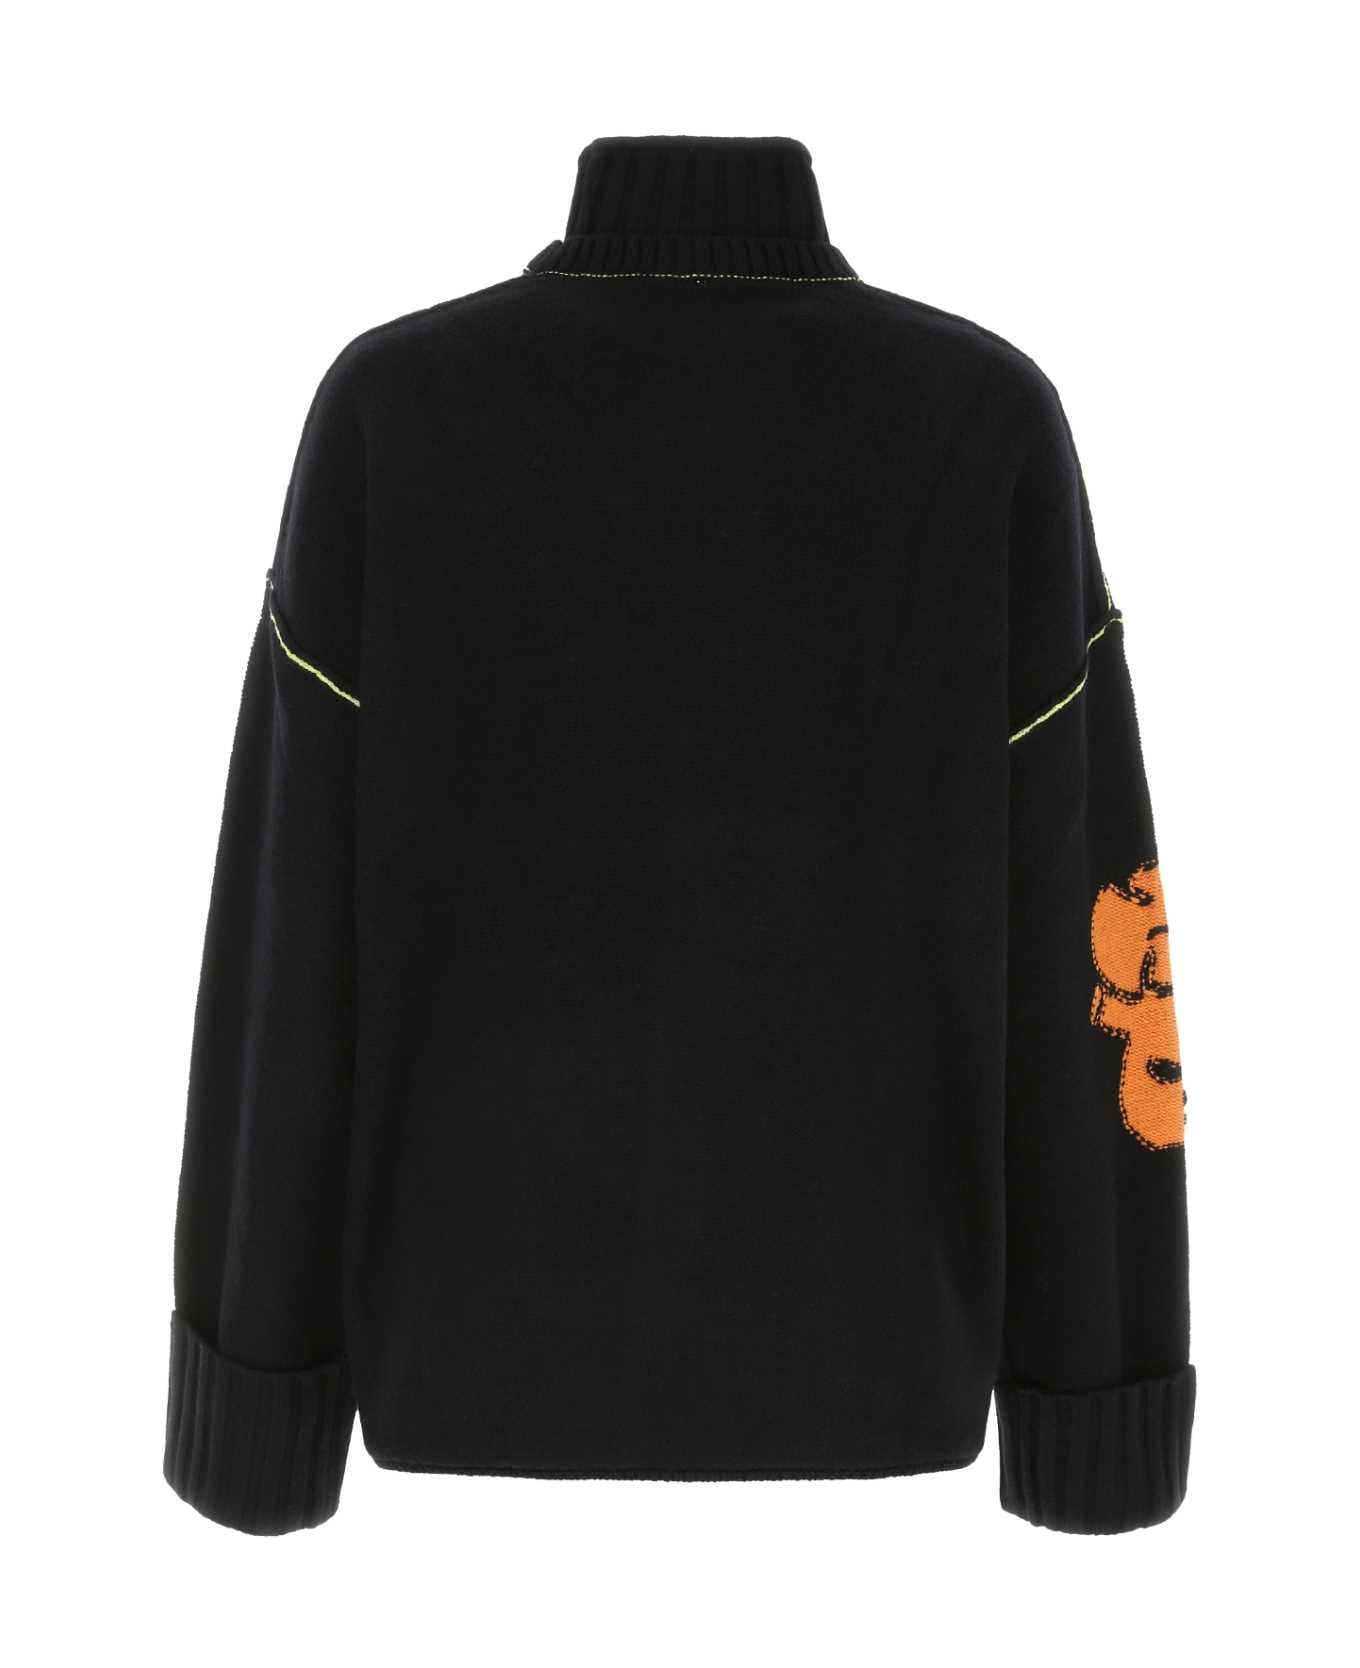 McQ Alexander McQueen Black Wool Oversize Sweater - 1000